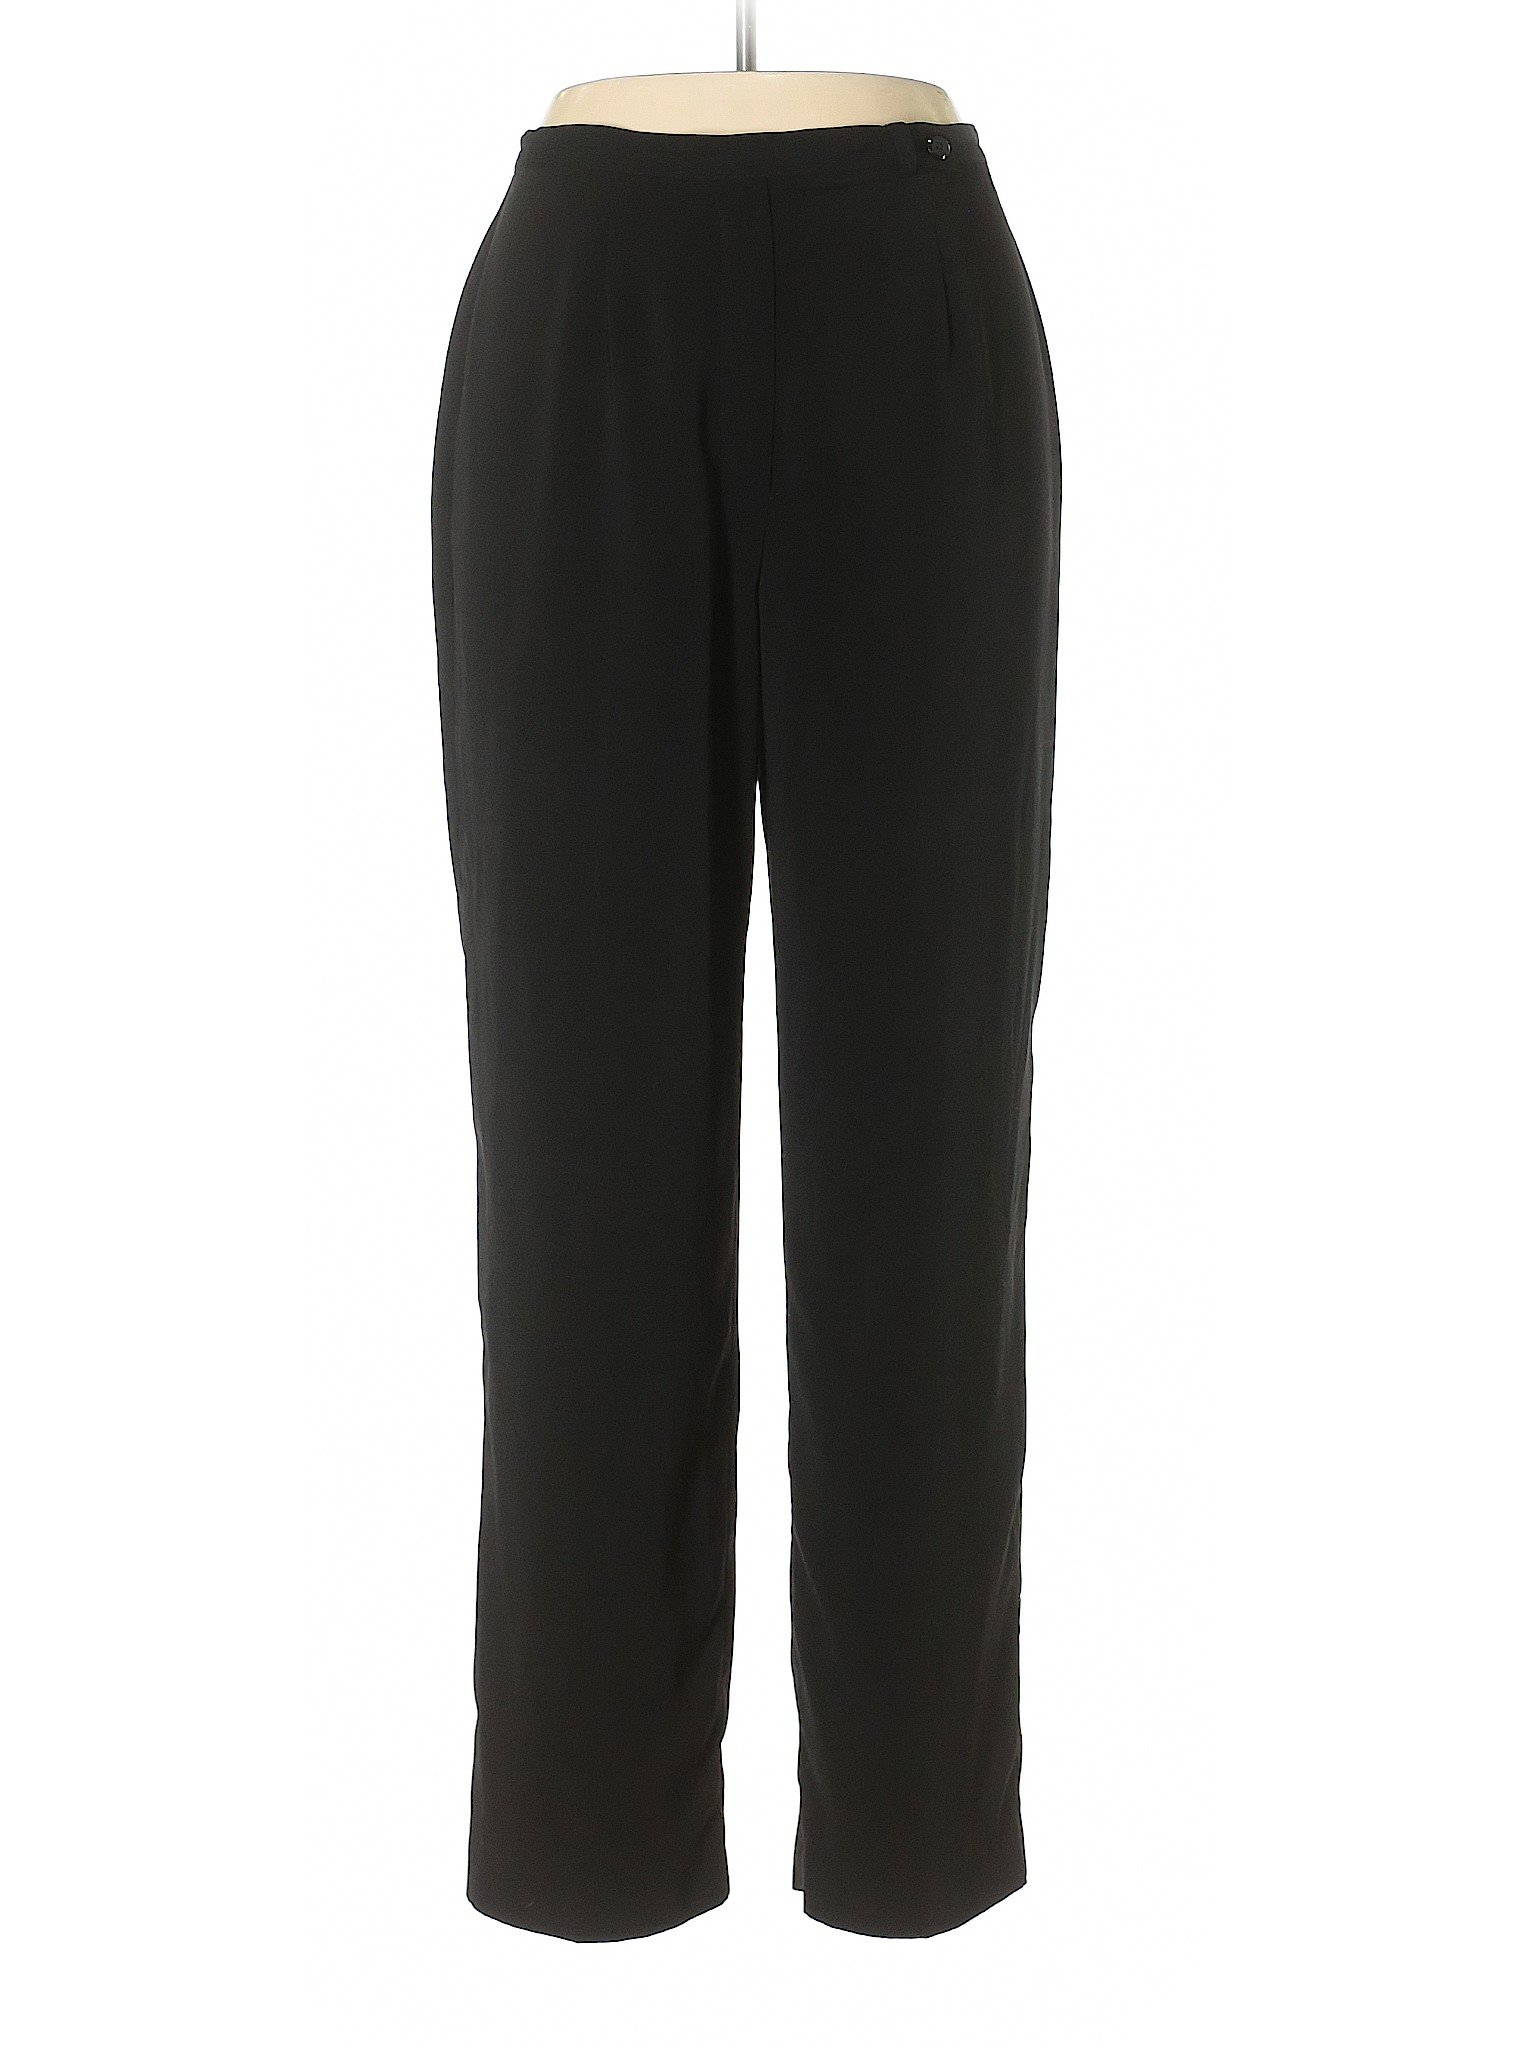 Norton McNaughton 100% Polyester Solid Black Dress Pants Size 12 - 75% ...